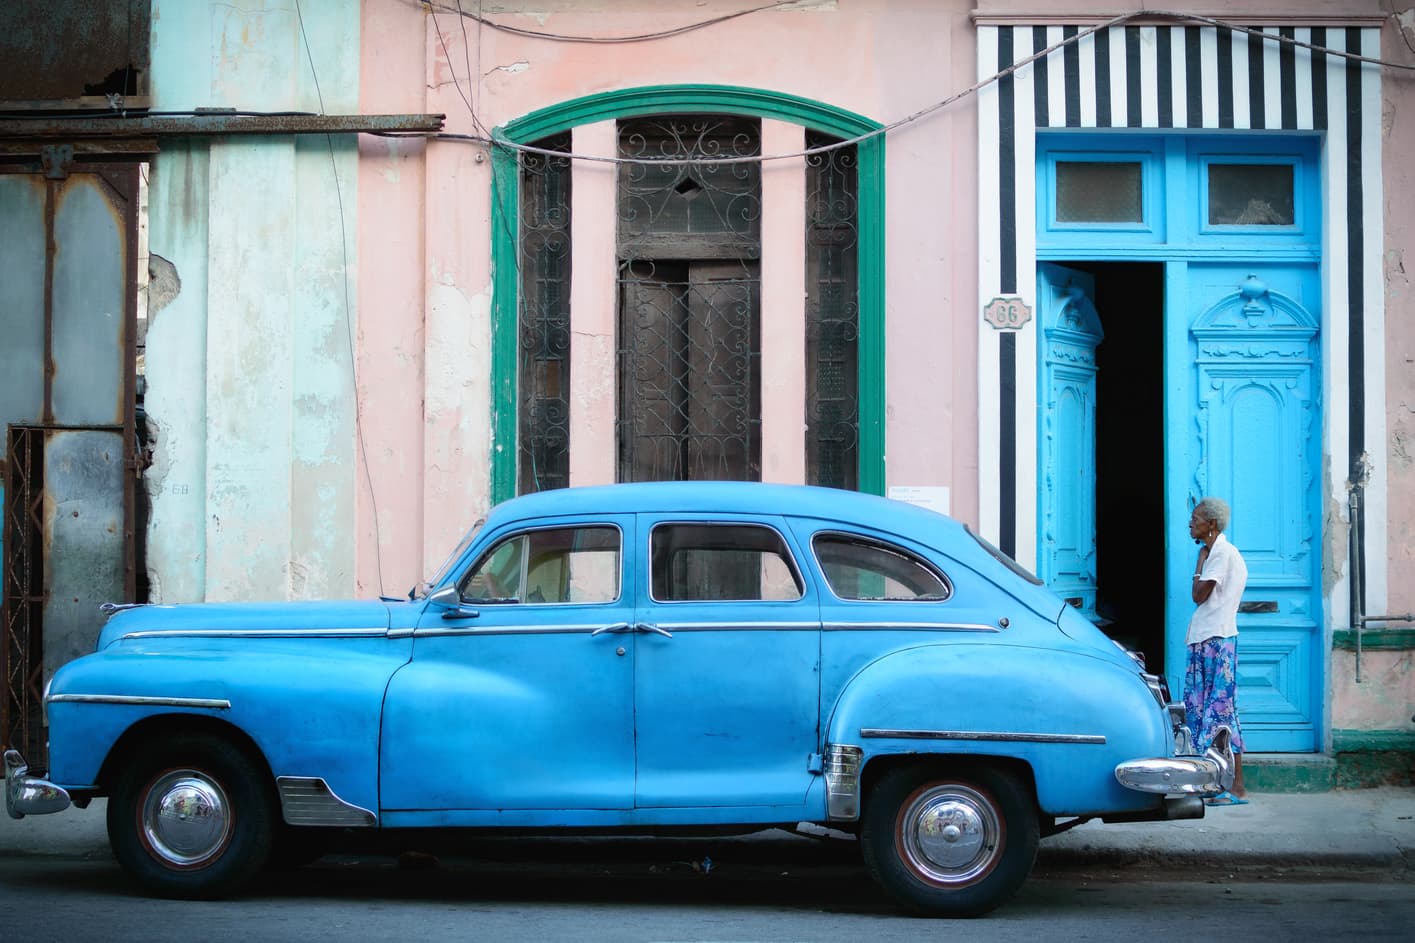 coche azul cadillac puerta azul señora seguro de viaje a cuba mas economico IATI o MONDO